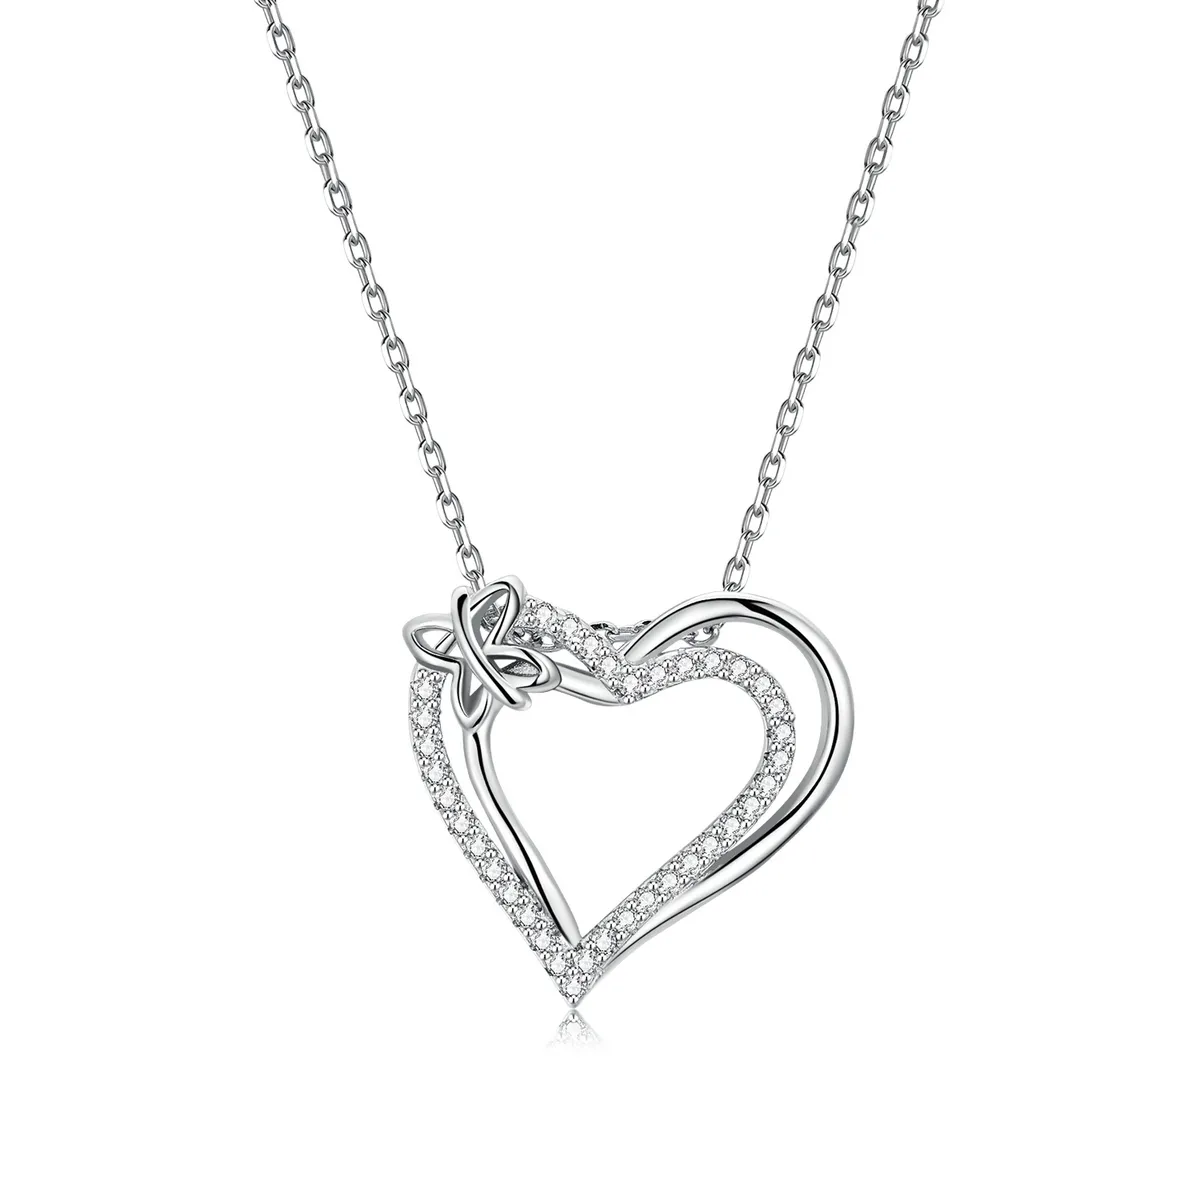 Pandora Style Double Love Necklace - BSN240